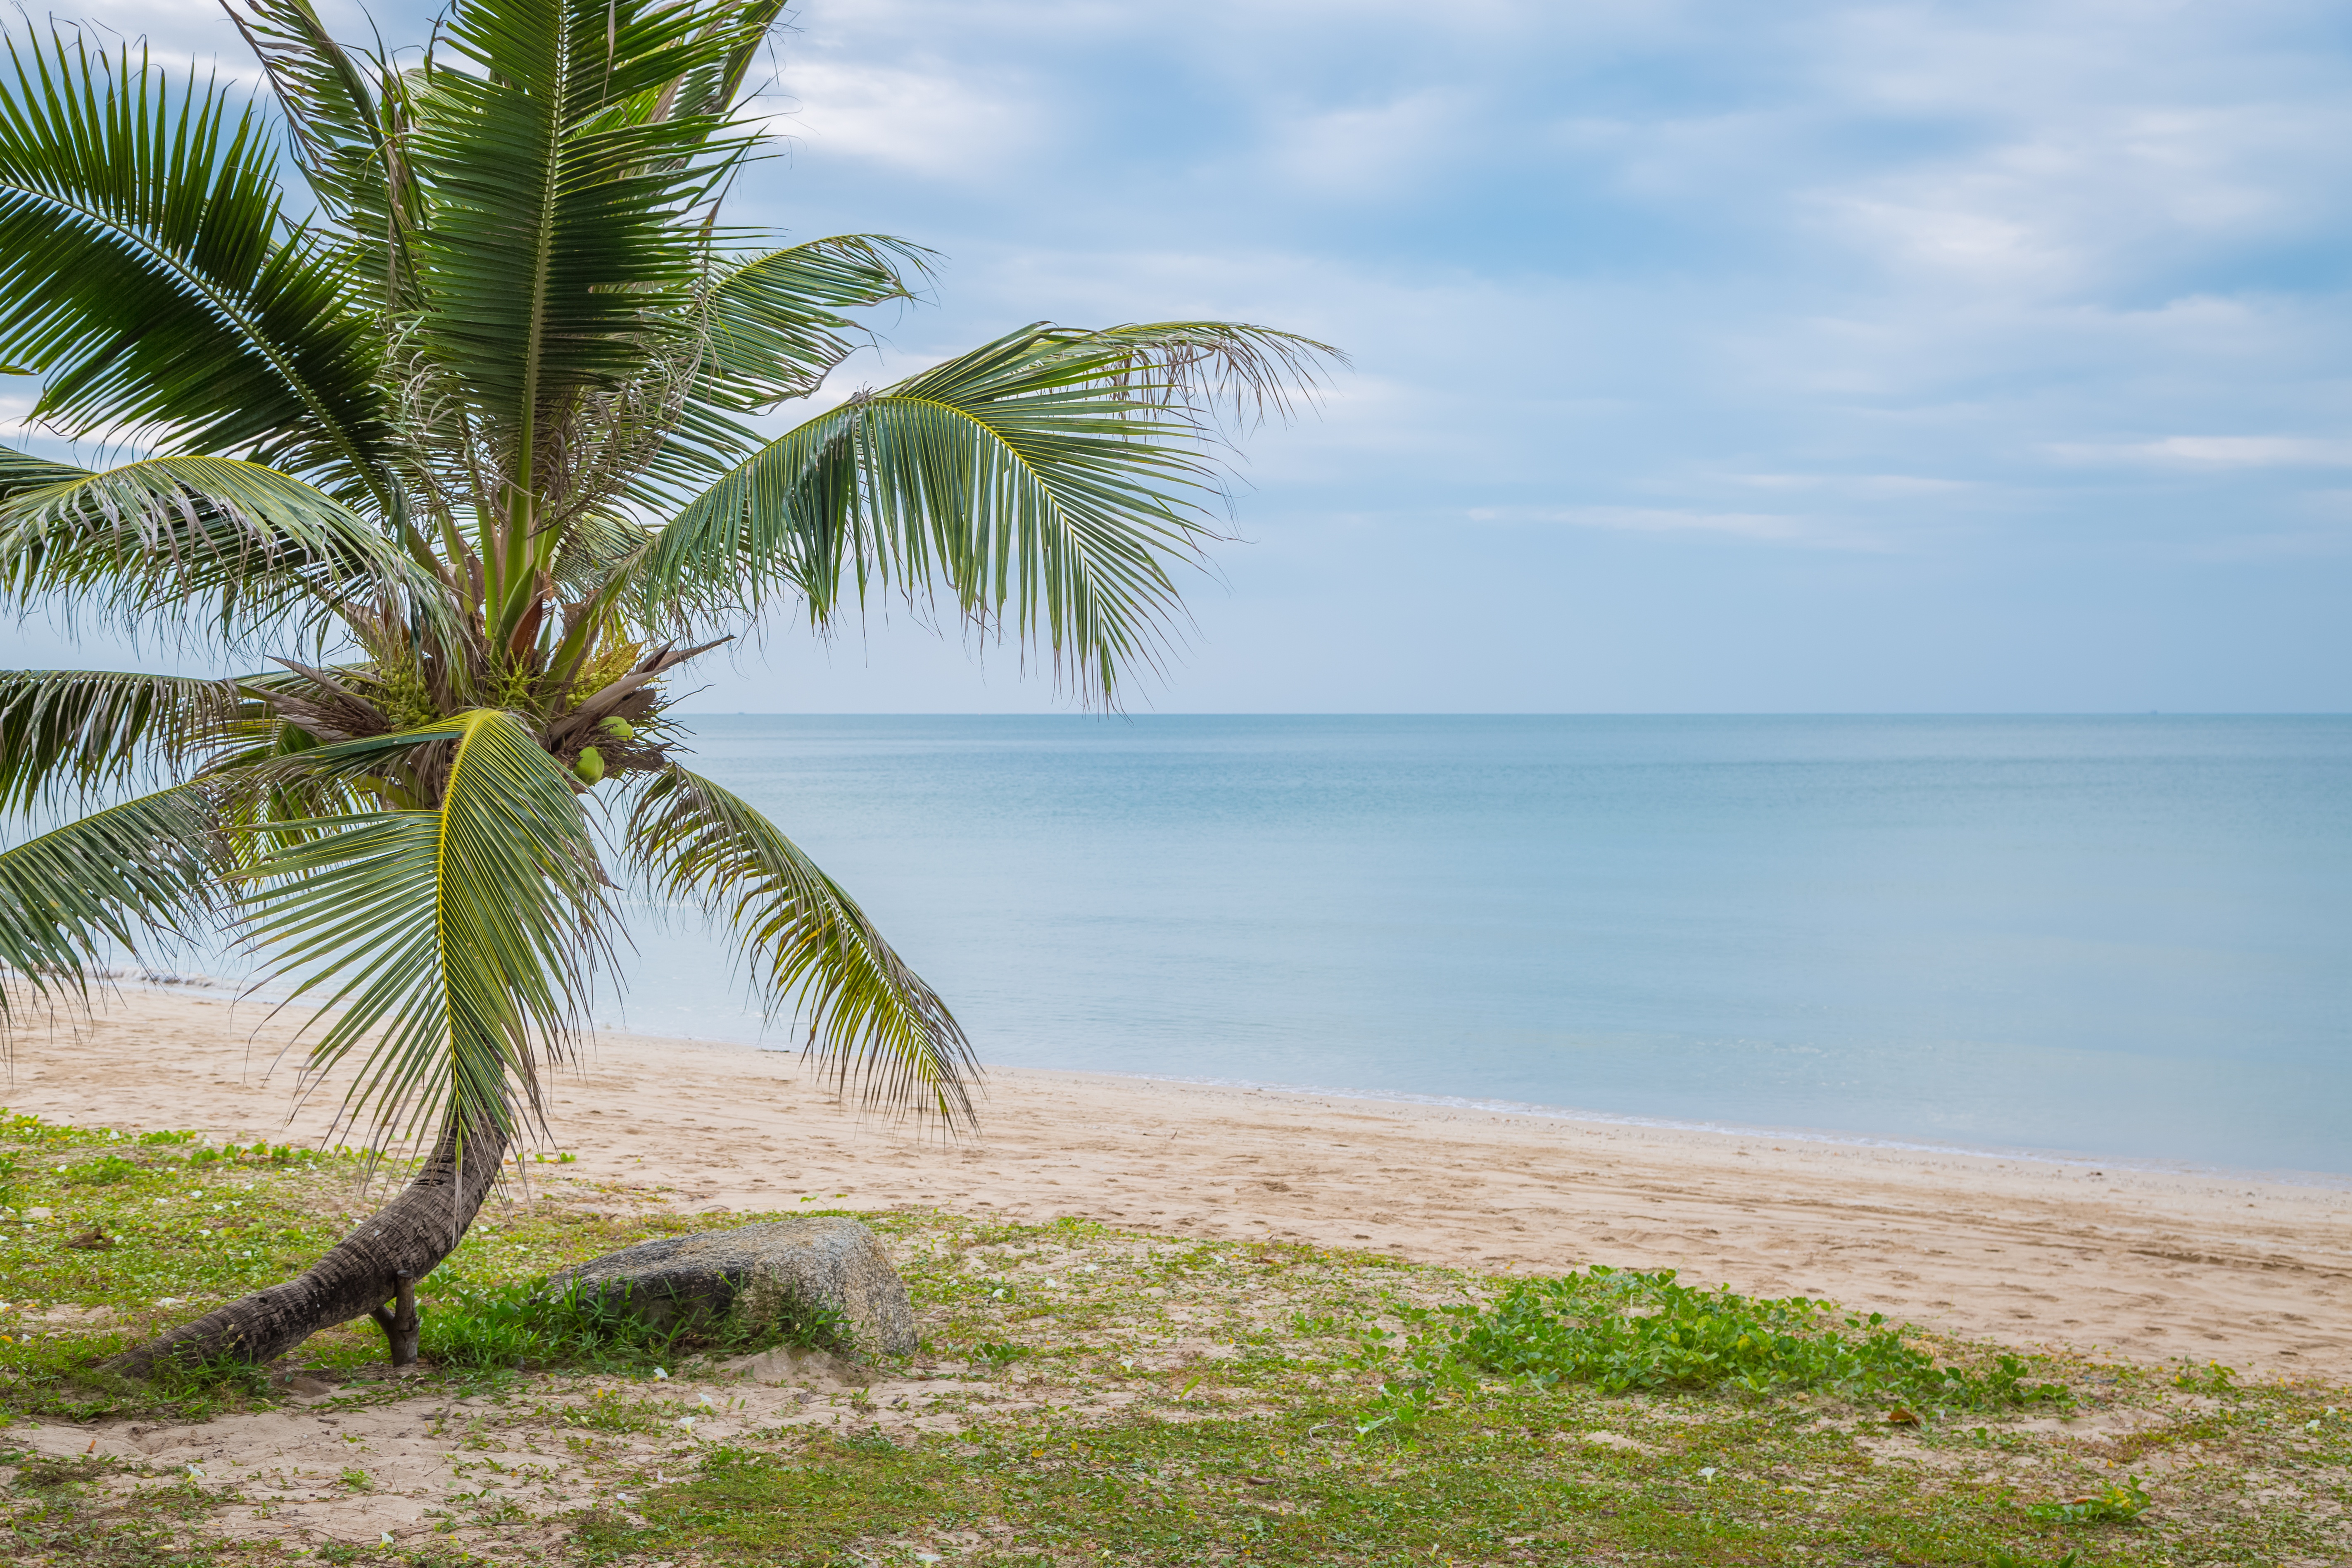 beach, beautiful, palms, paradise, sand, sea, seascape, summer, tropical, берег, лето, море, небо, пальмы, песок, пляж, солнце